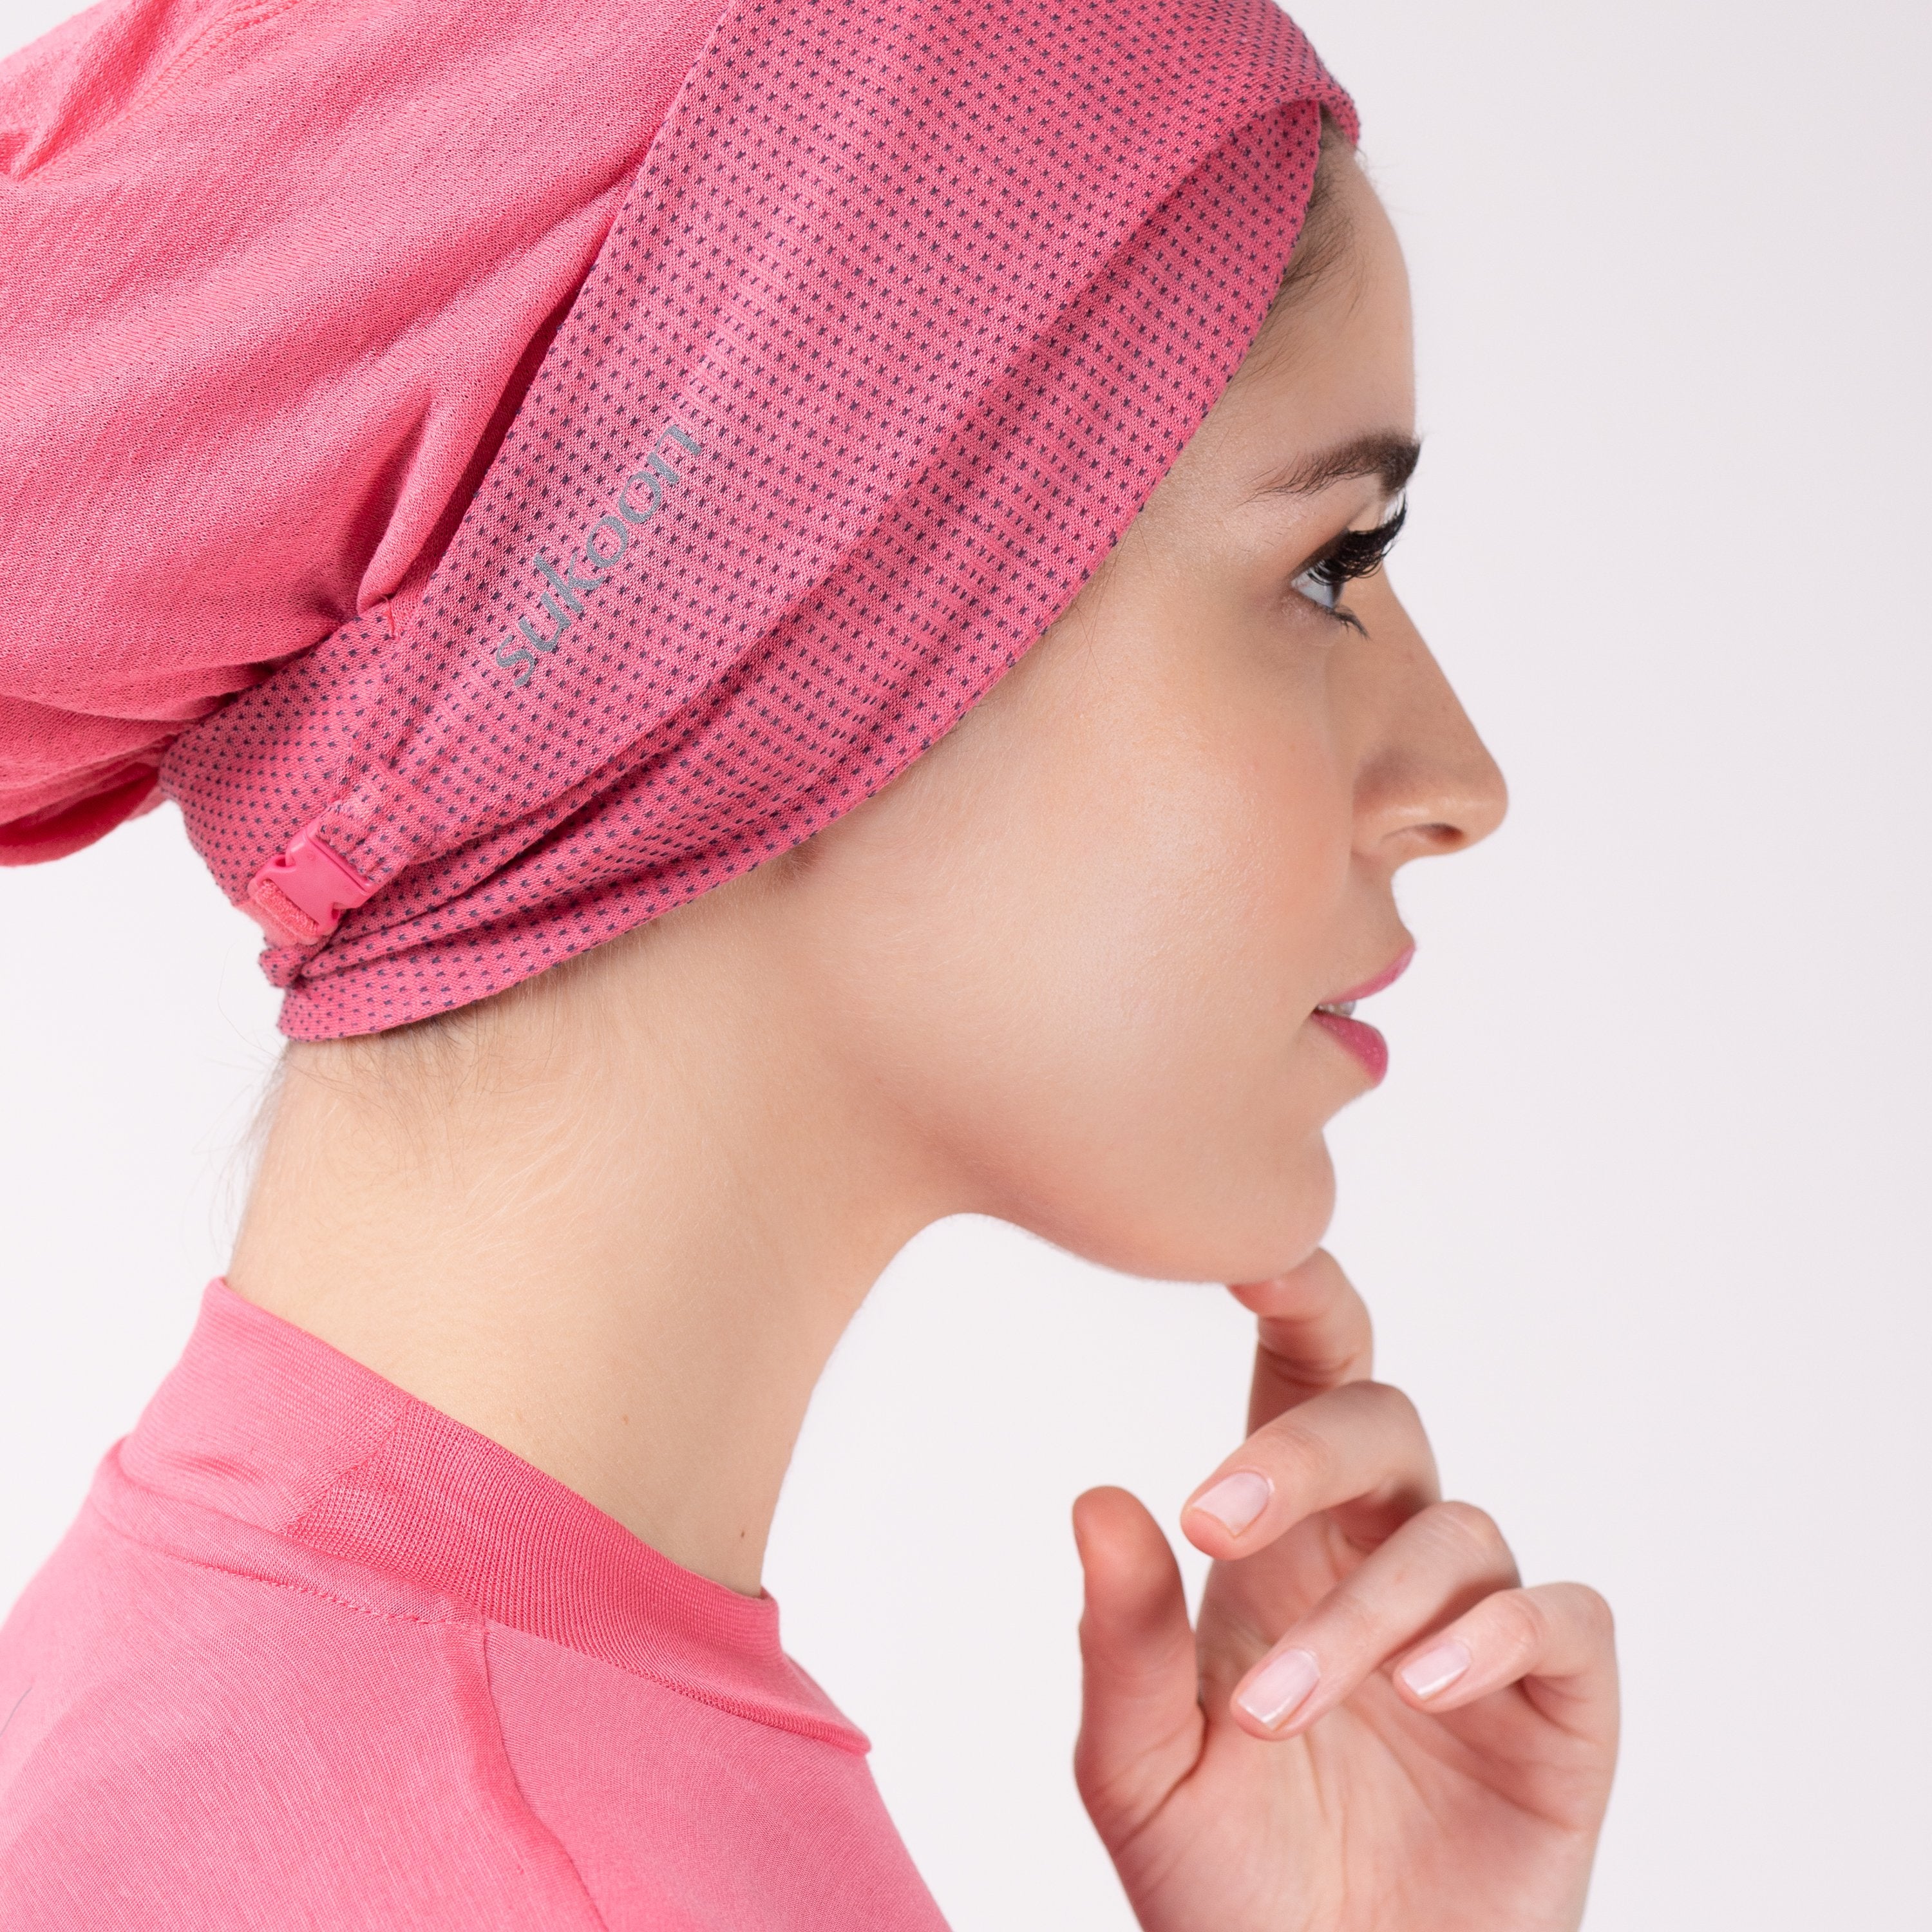 Side detail of woman in pink HAWA headwrap.